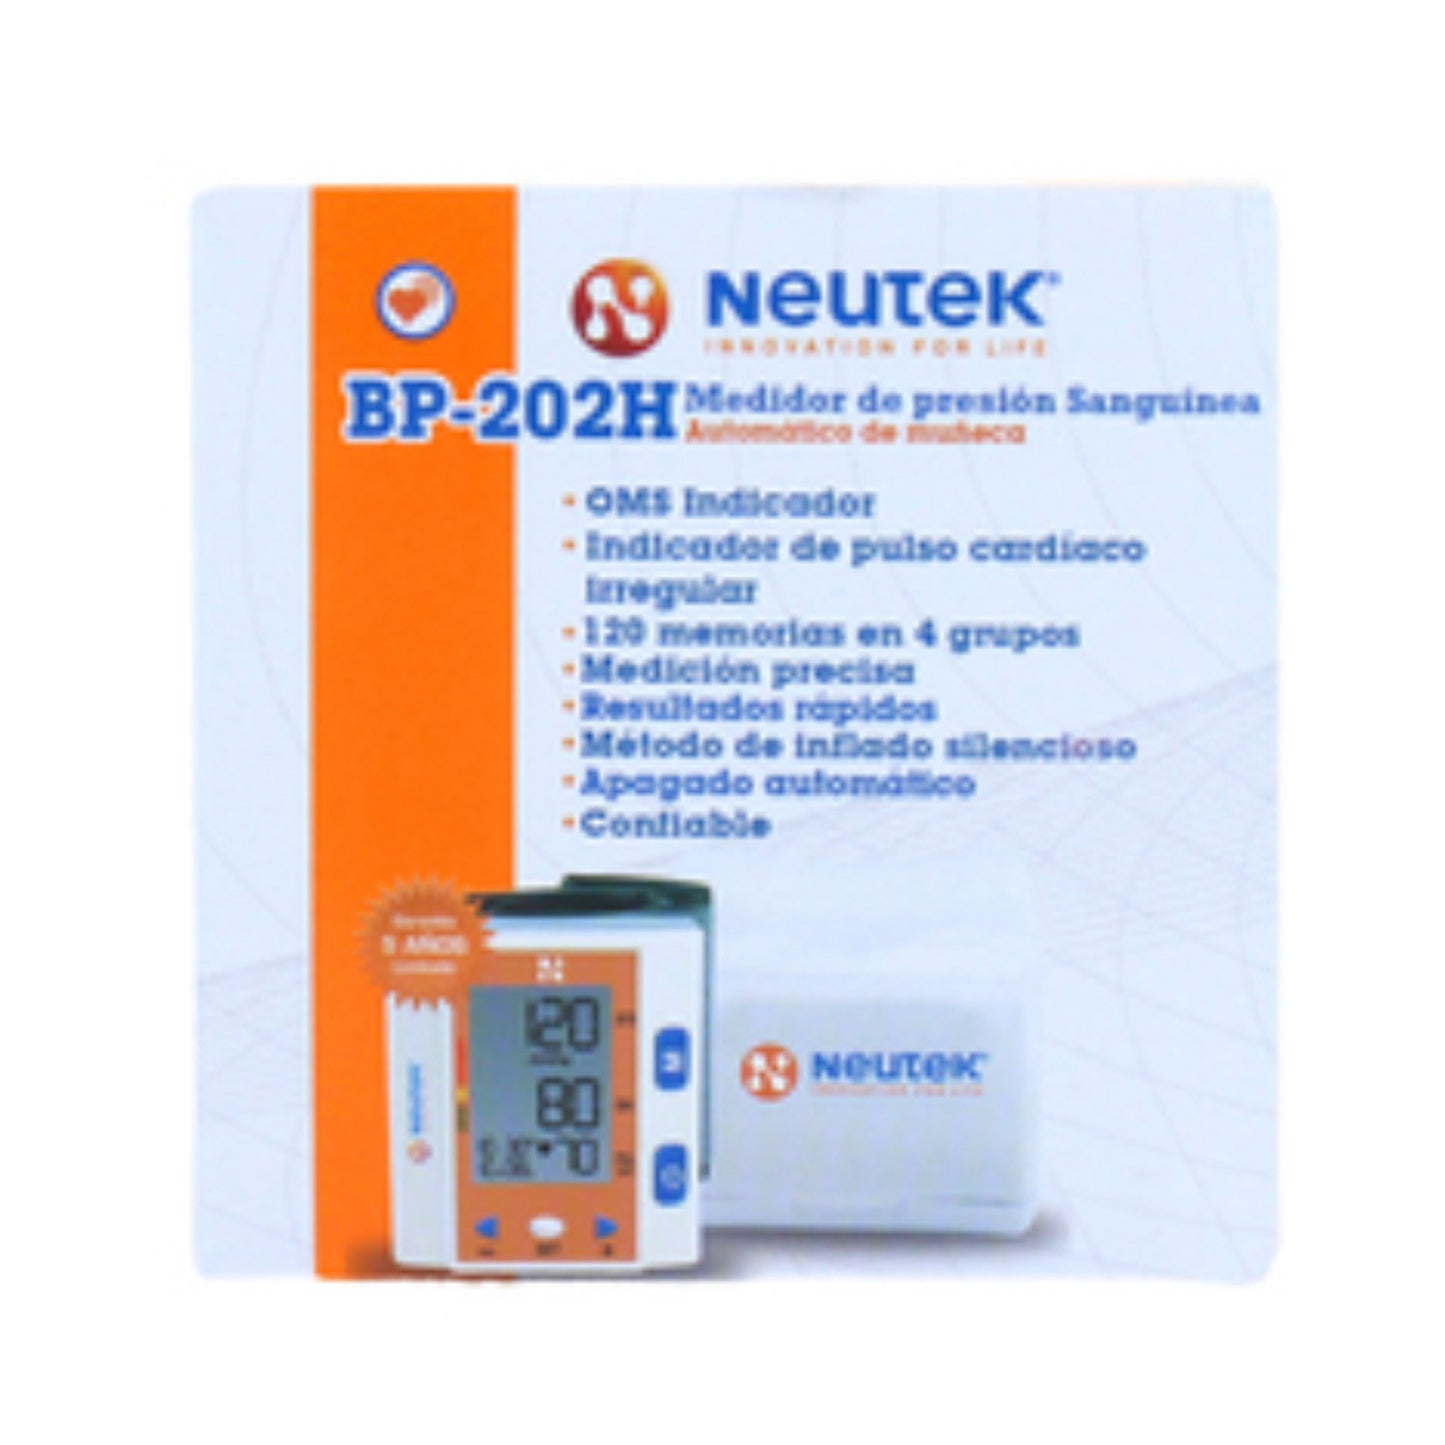 Medidor de presión sanguínea BP-202H, marca Neutek®